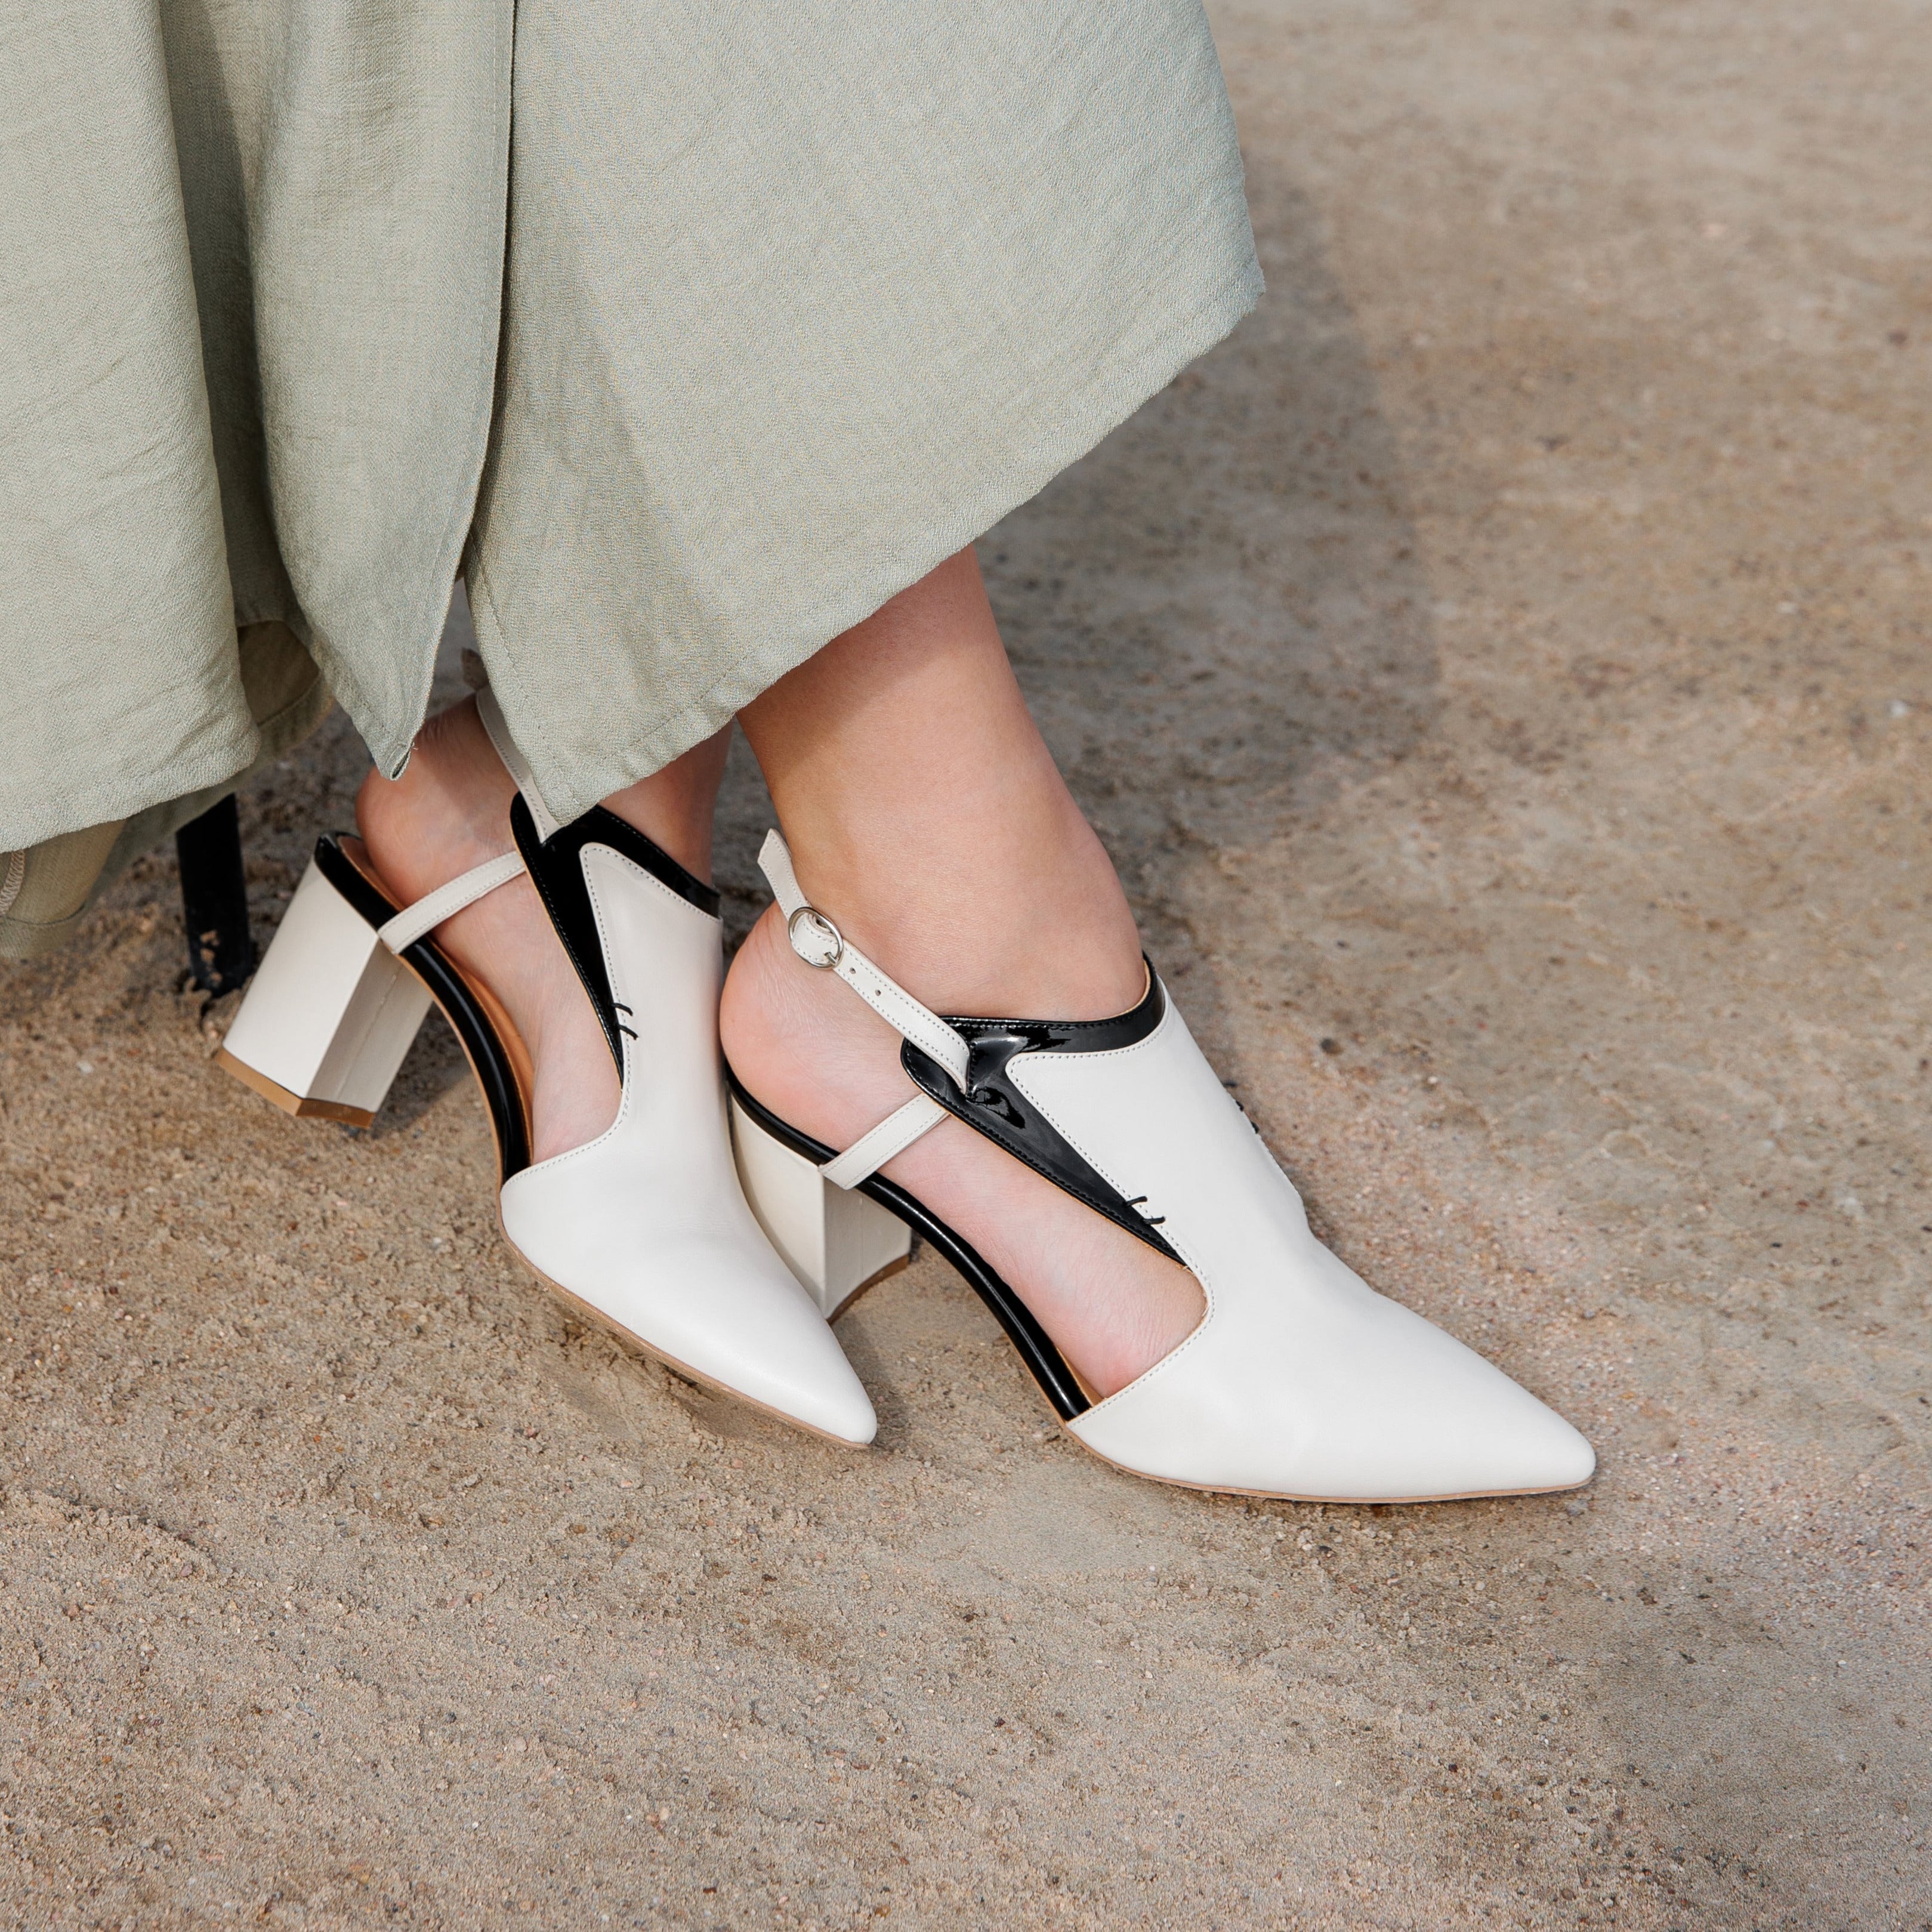 Stylish Beige Leather Low Heels | Cinderella Shoes